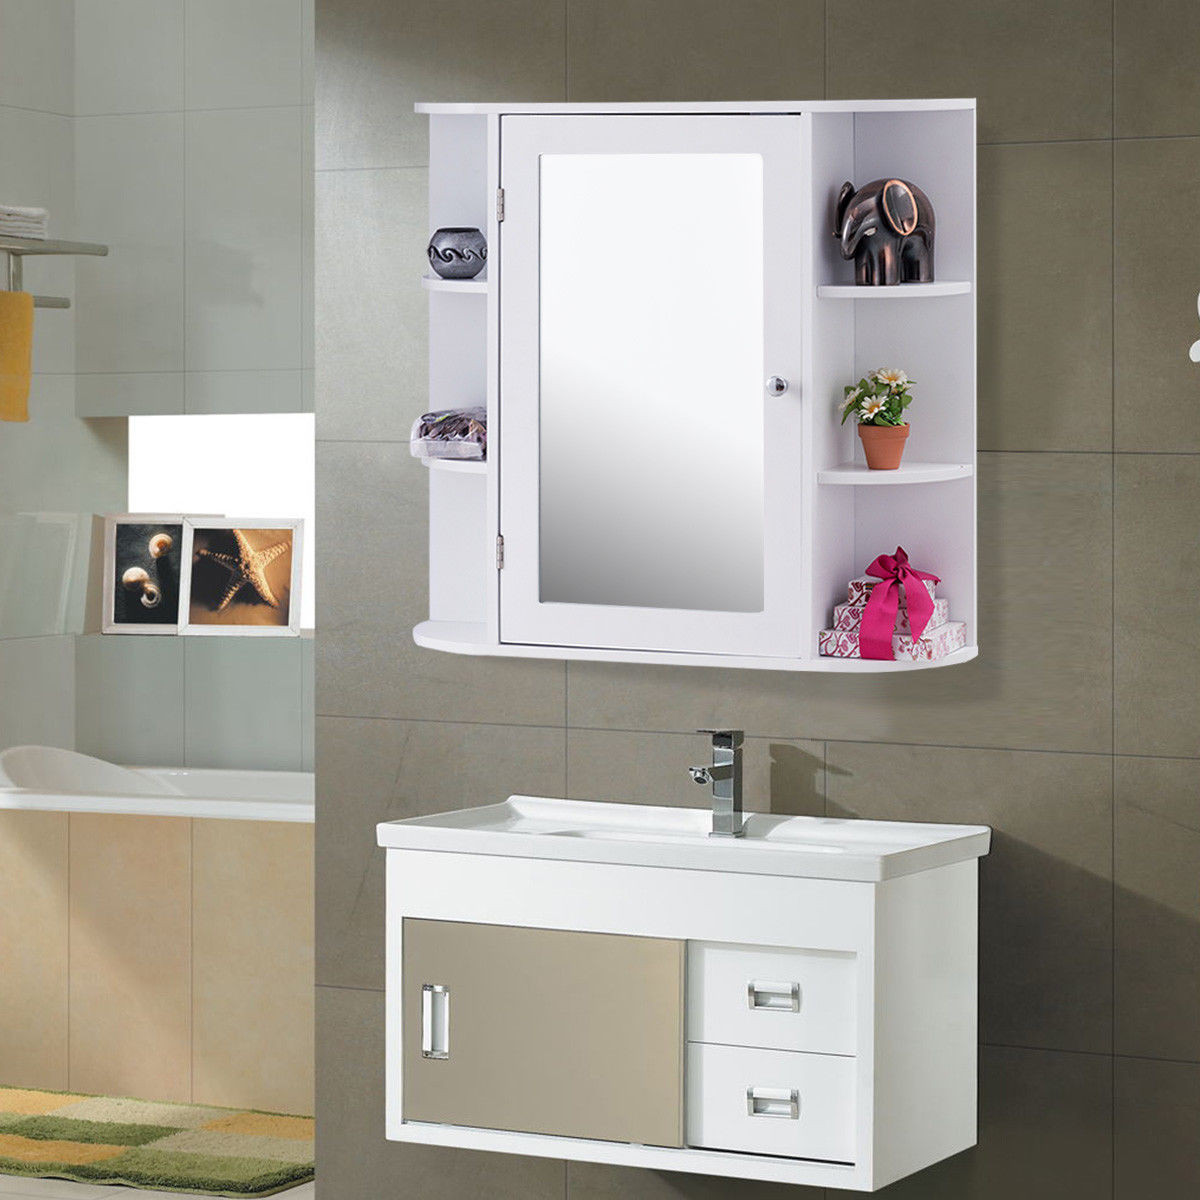 Mirrored Bathroom Cabinet
 Giantex Multipurpose Mount Wall Surface Bathroom Storage